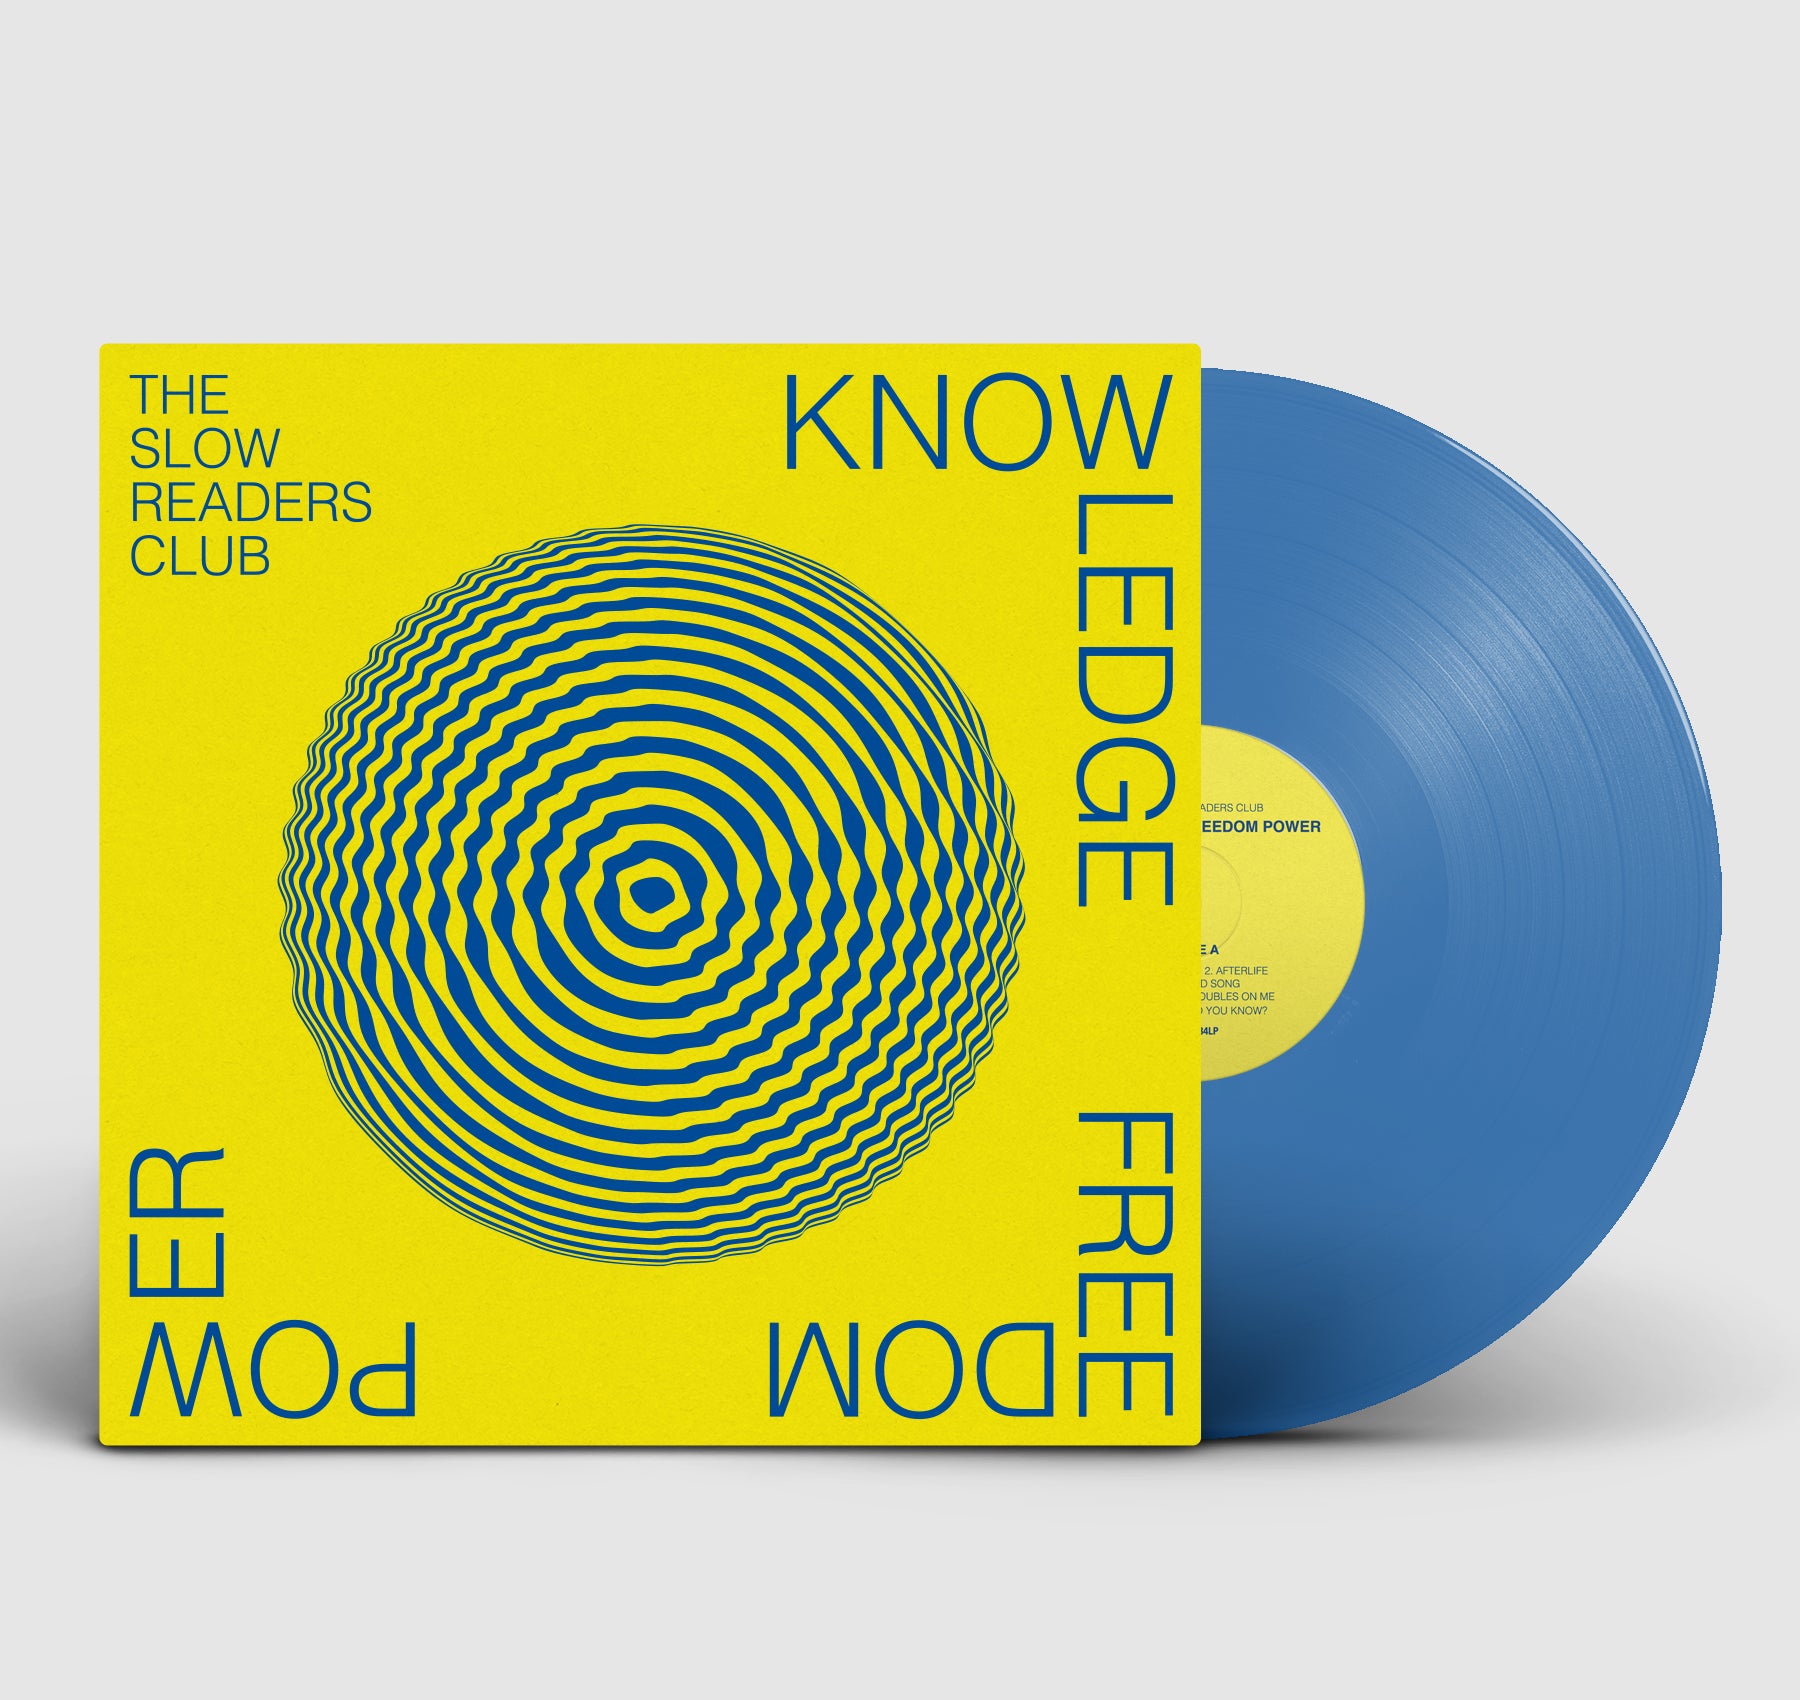 The Slow Readers Club - Knowledge Freedom Power (Blue Vinyl)